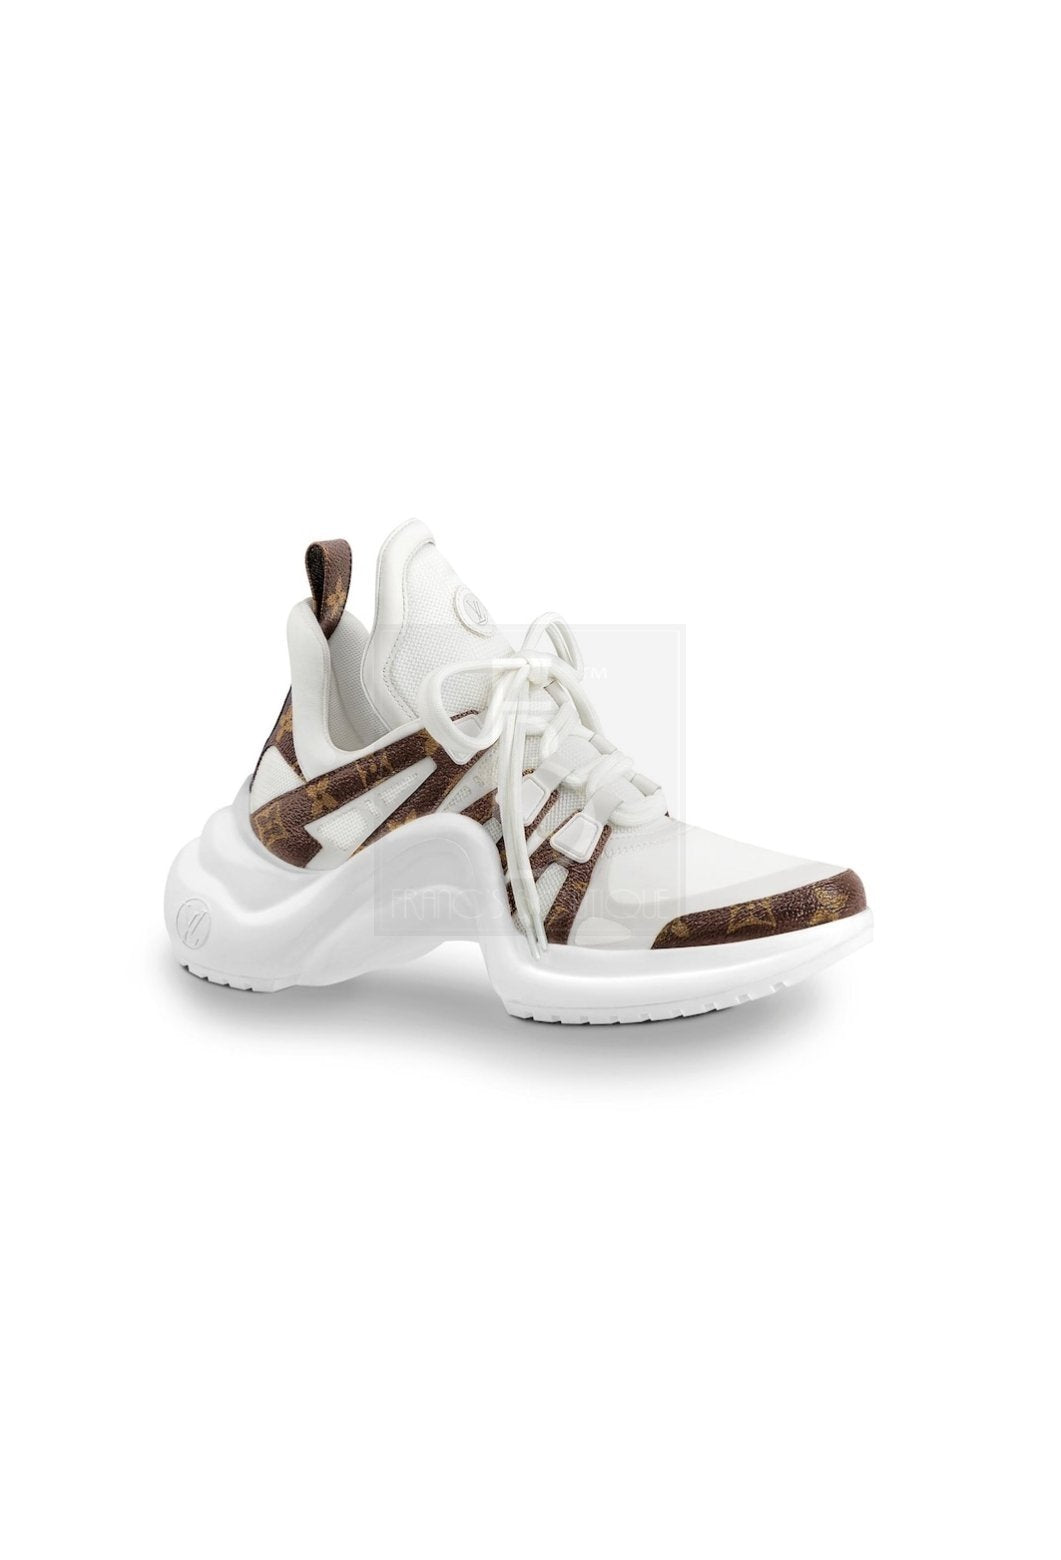 LV Archlight Sneaker – Franc's Boutique